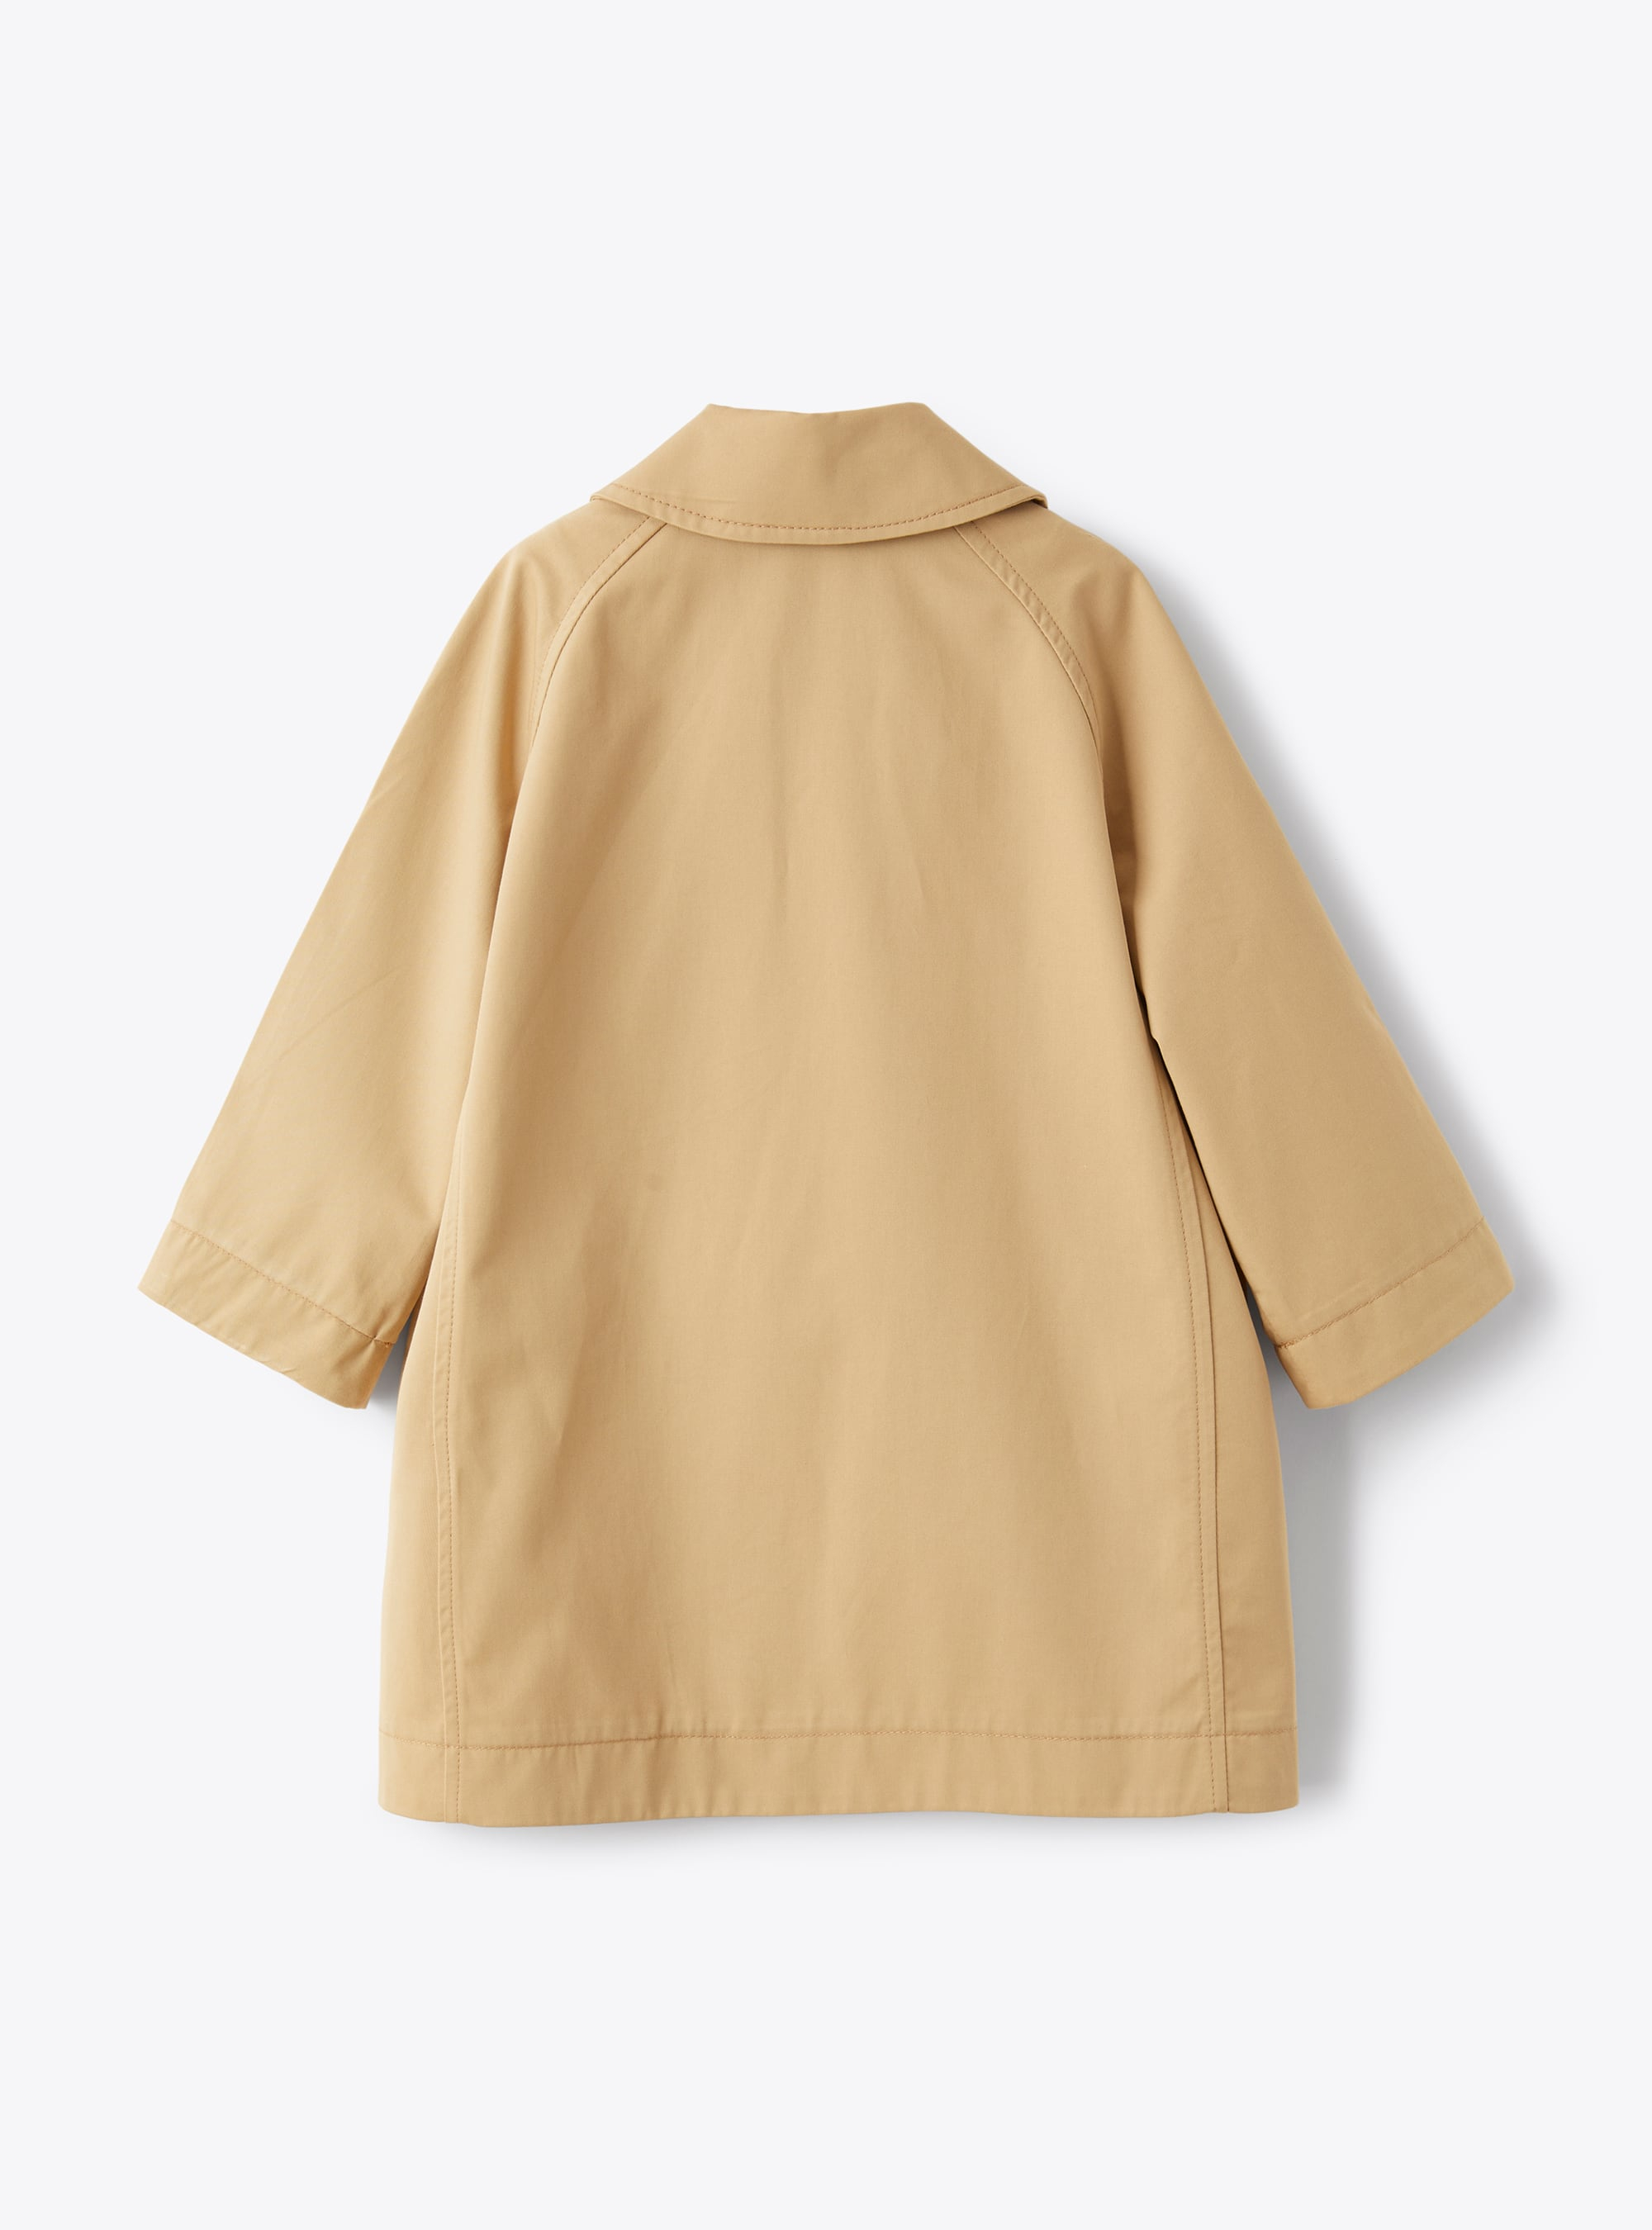 Trench coat in beige gabardine - Beige | Il Gufo